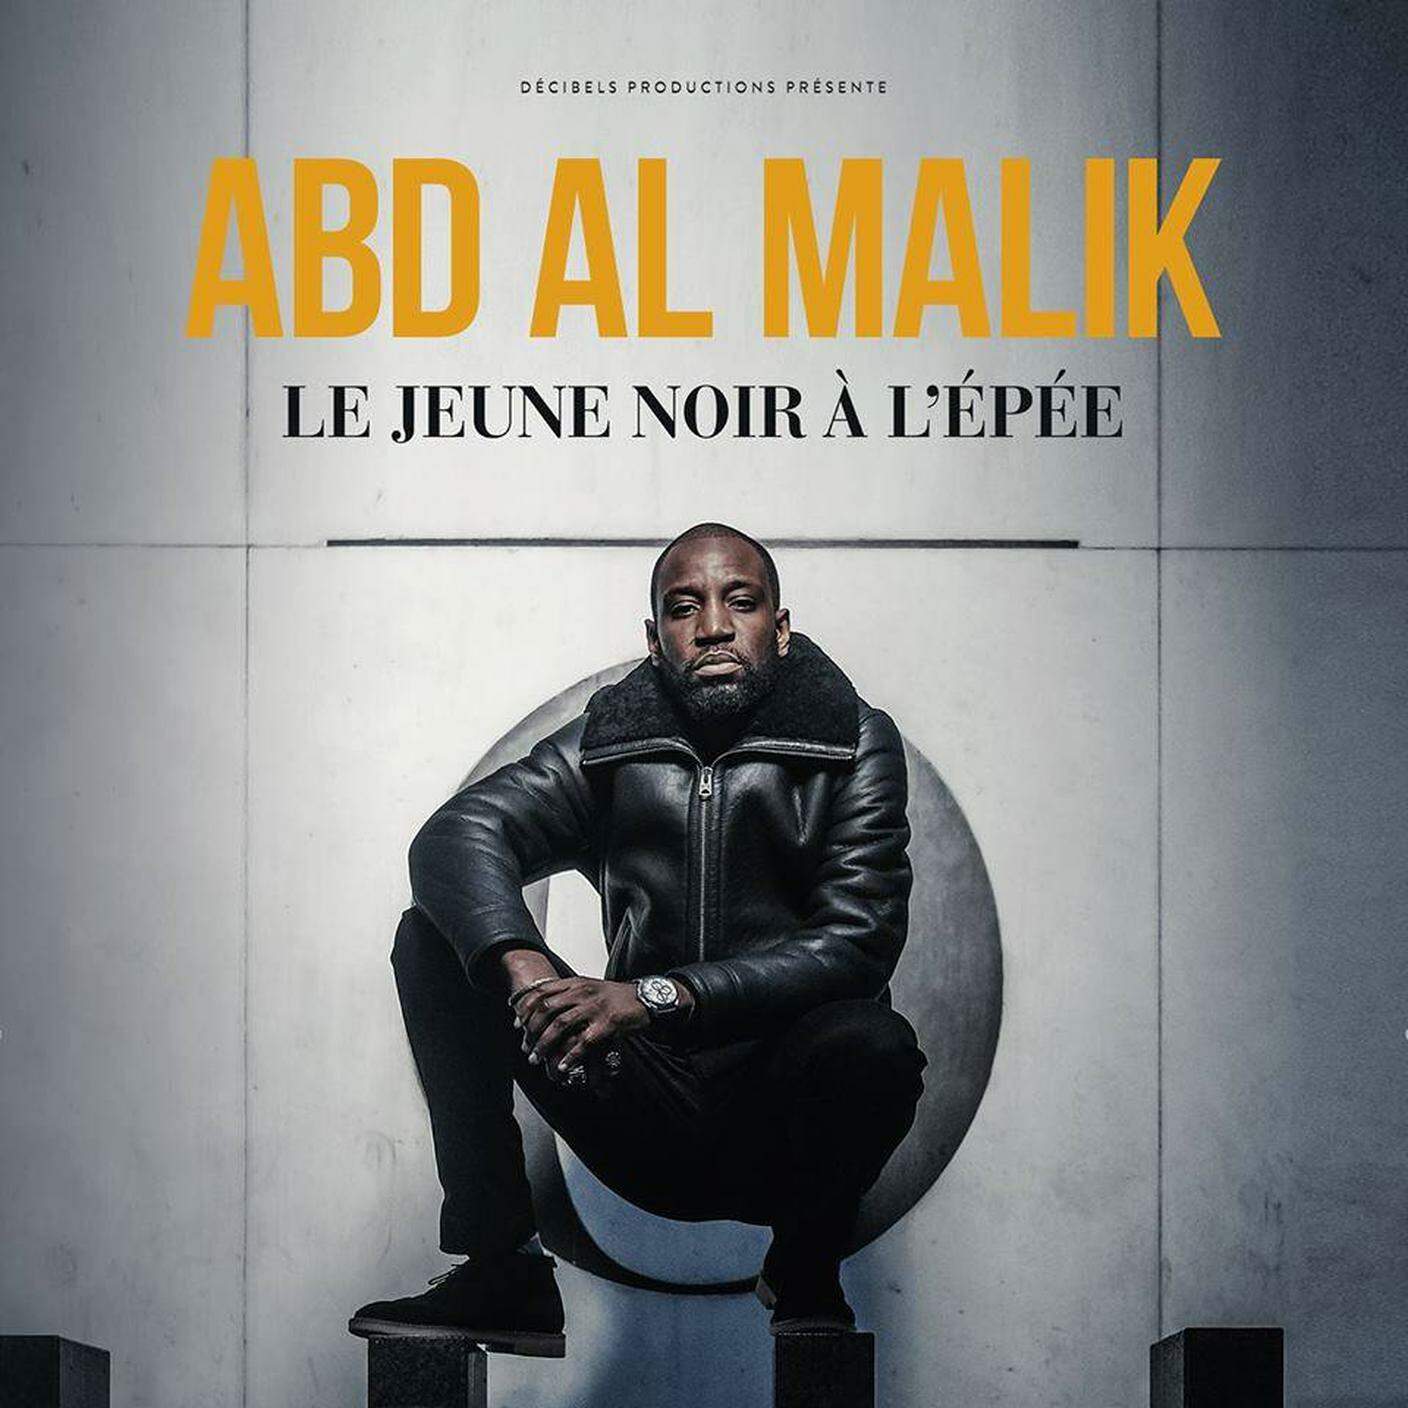 Abd al Malik, "Le jeune noir à l’épée", Decibels Productions (dettaglio copertina)